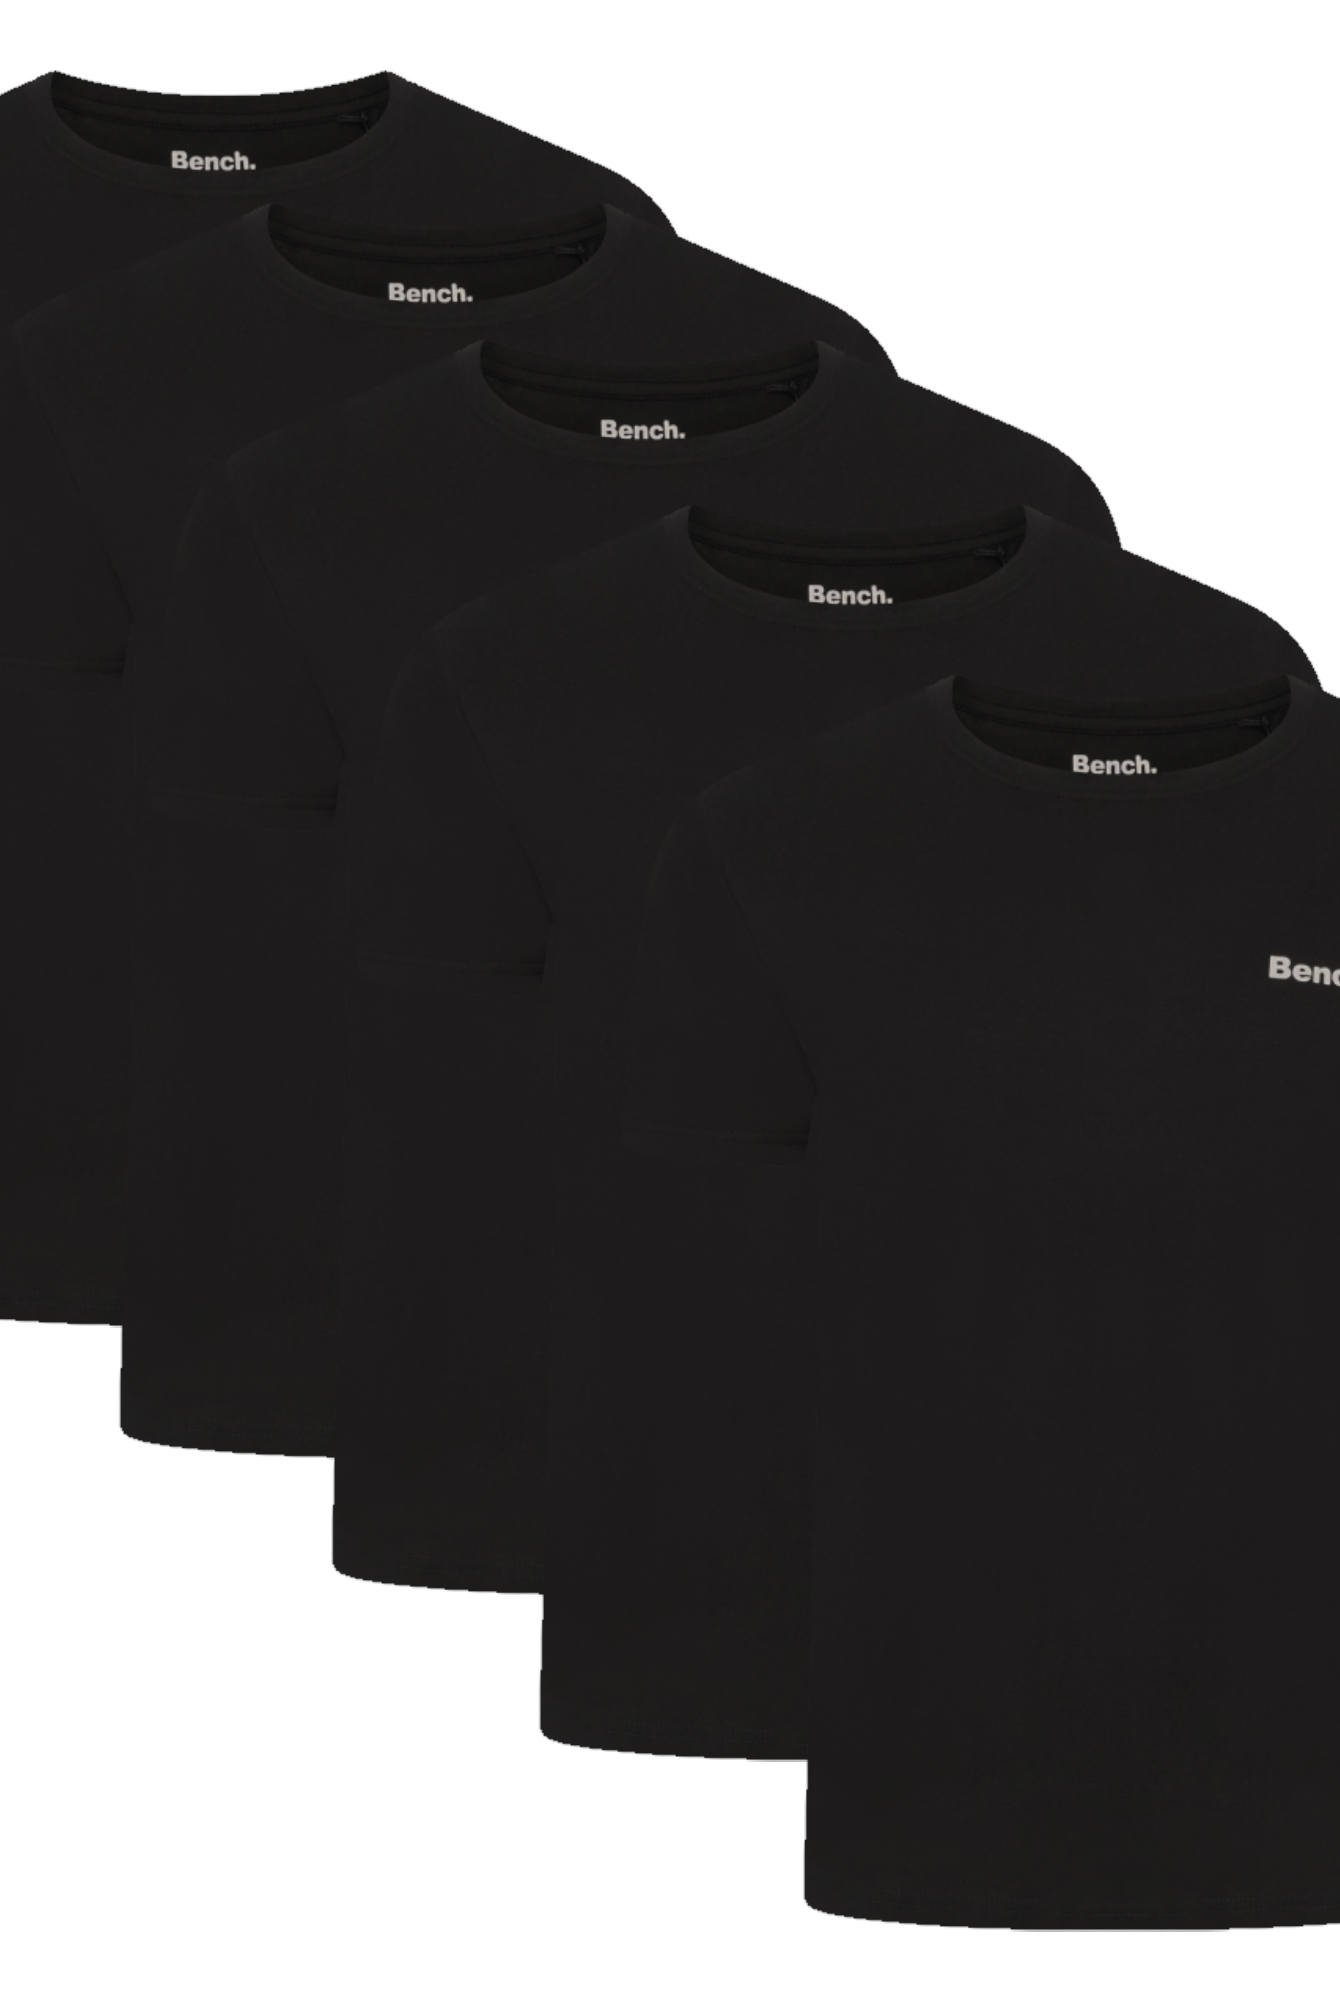 Mens 'HERMAN' 5 Pack T-Shirt - BLACK - Shop at www.Bench.co.uk #LoveMyHood